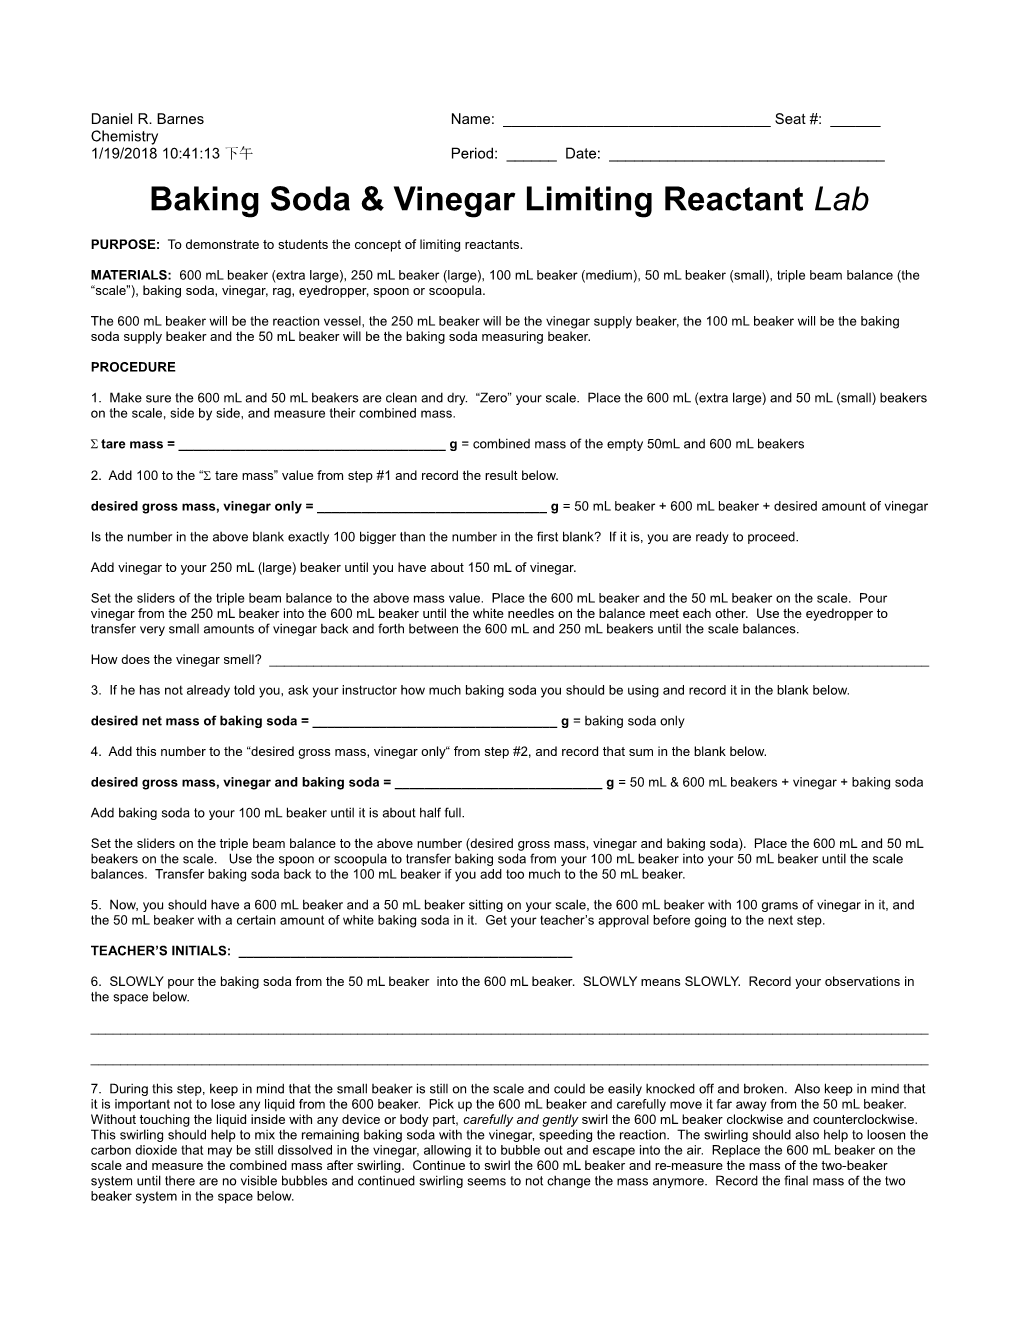 Baking Soda and Vinegar Limiting Reactant Lab, Daniel R. Barnes, Chemistry, 11/22/04 10:39:55 AM